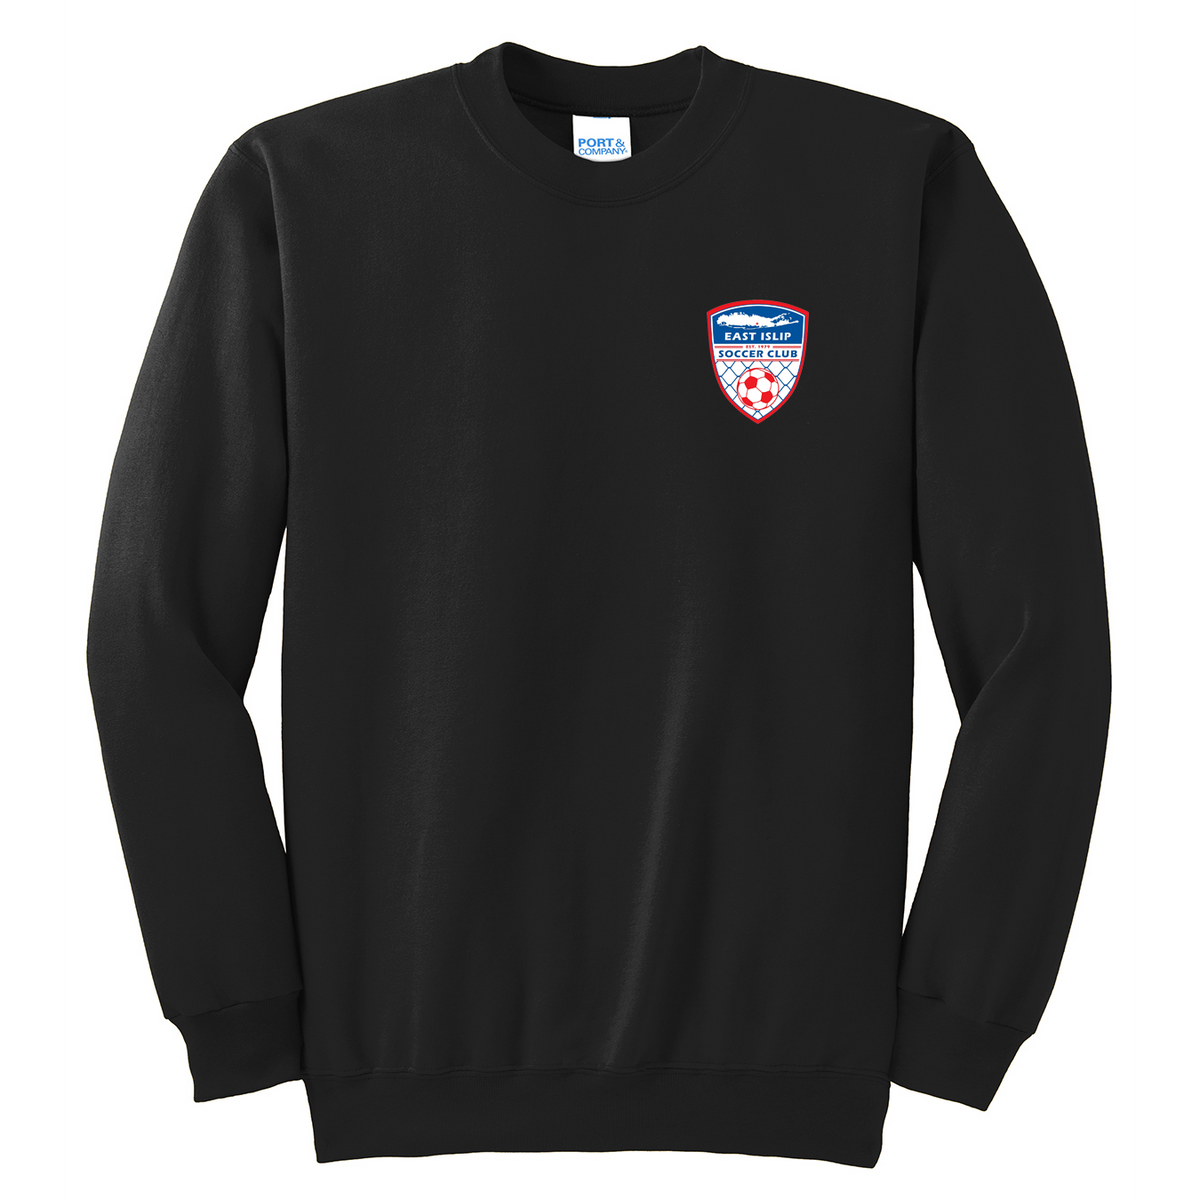 East Islip Soccer Club  Crew Neck Sweater